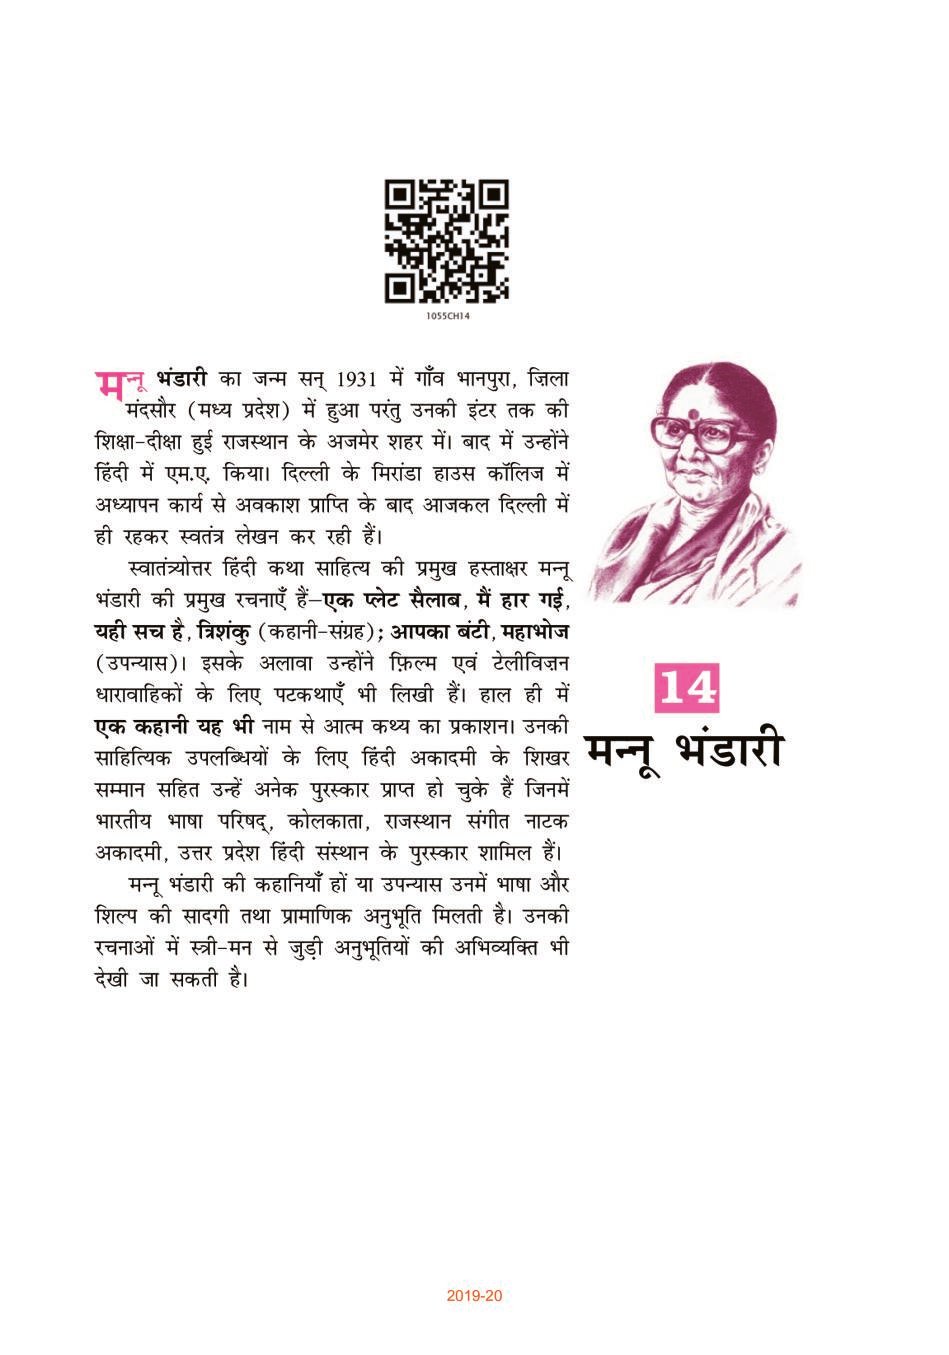 NCERT Book Class 10 Hindi (क्षितिज) Chapter 14 एक कहानी यह भी - Page 1